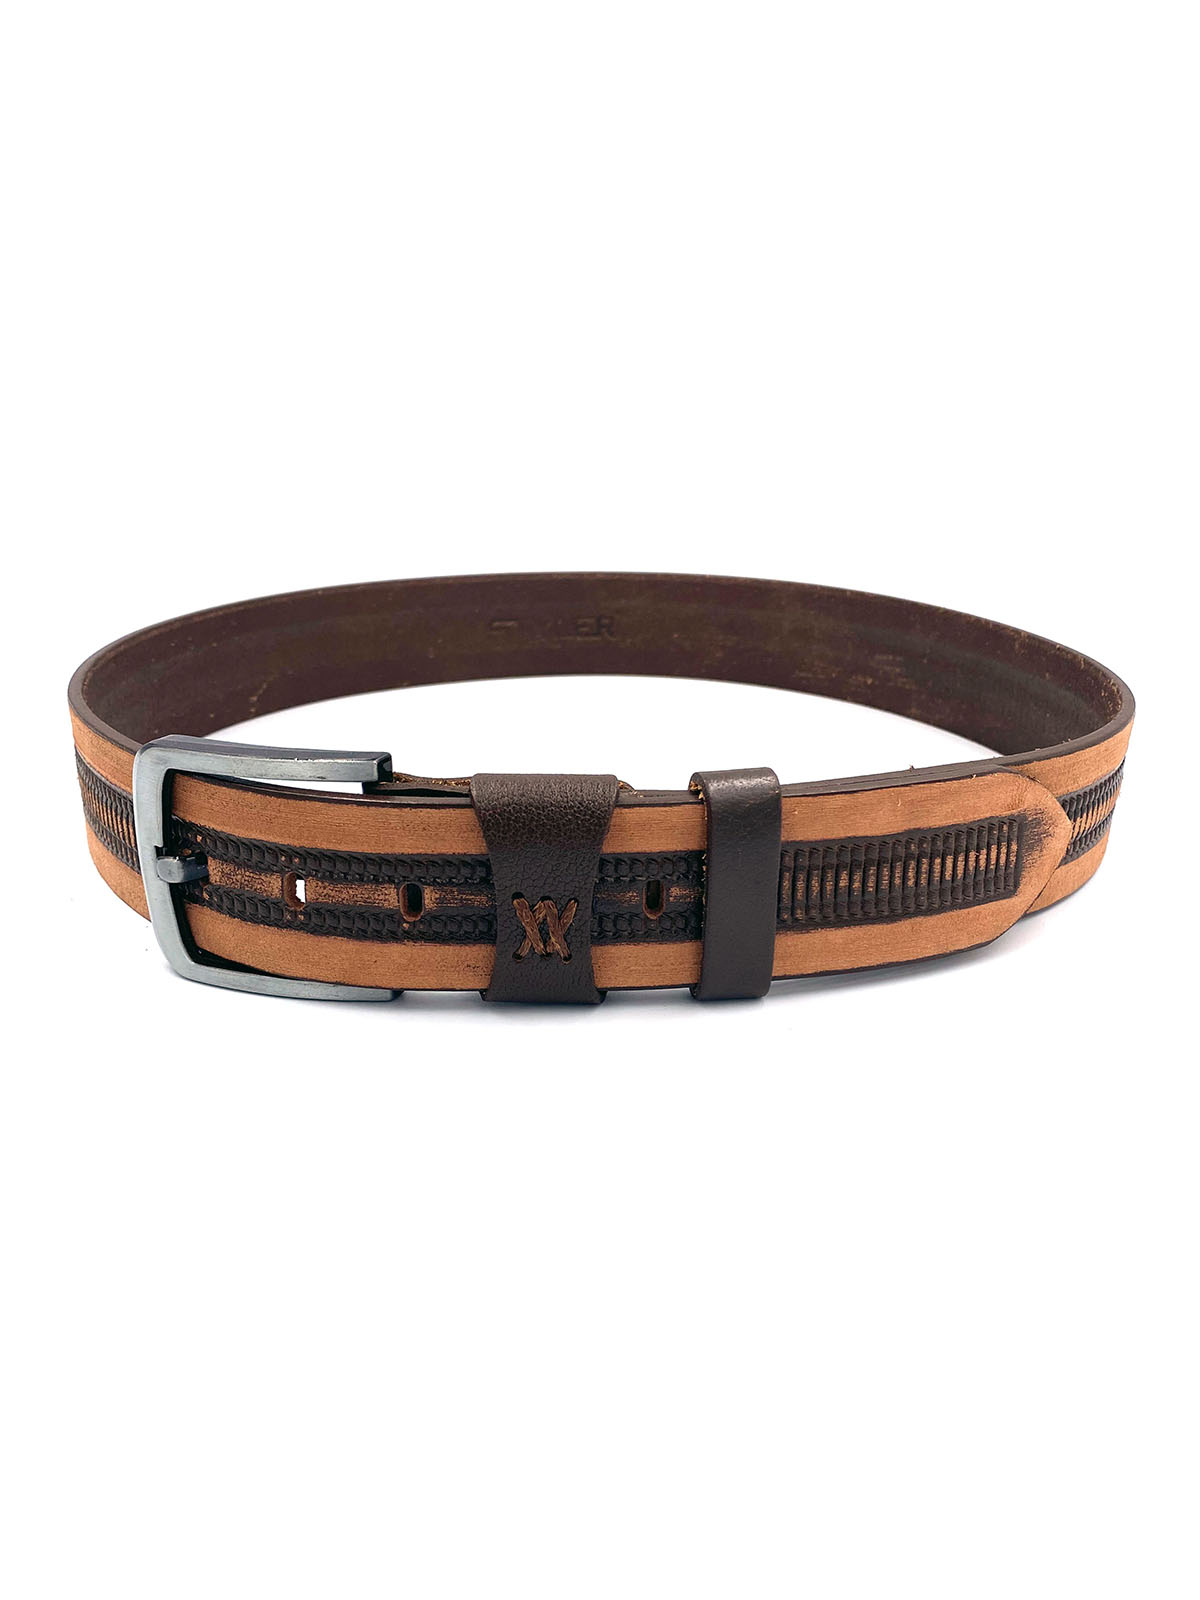  sport belt genuine leather  - 10436 - € 21.37 img2